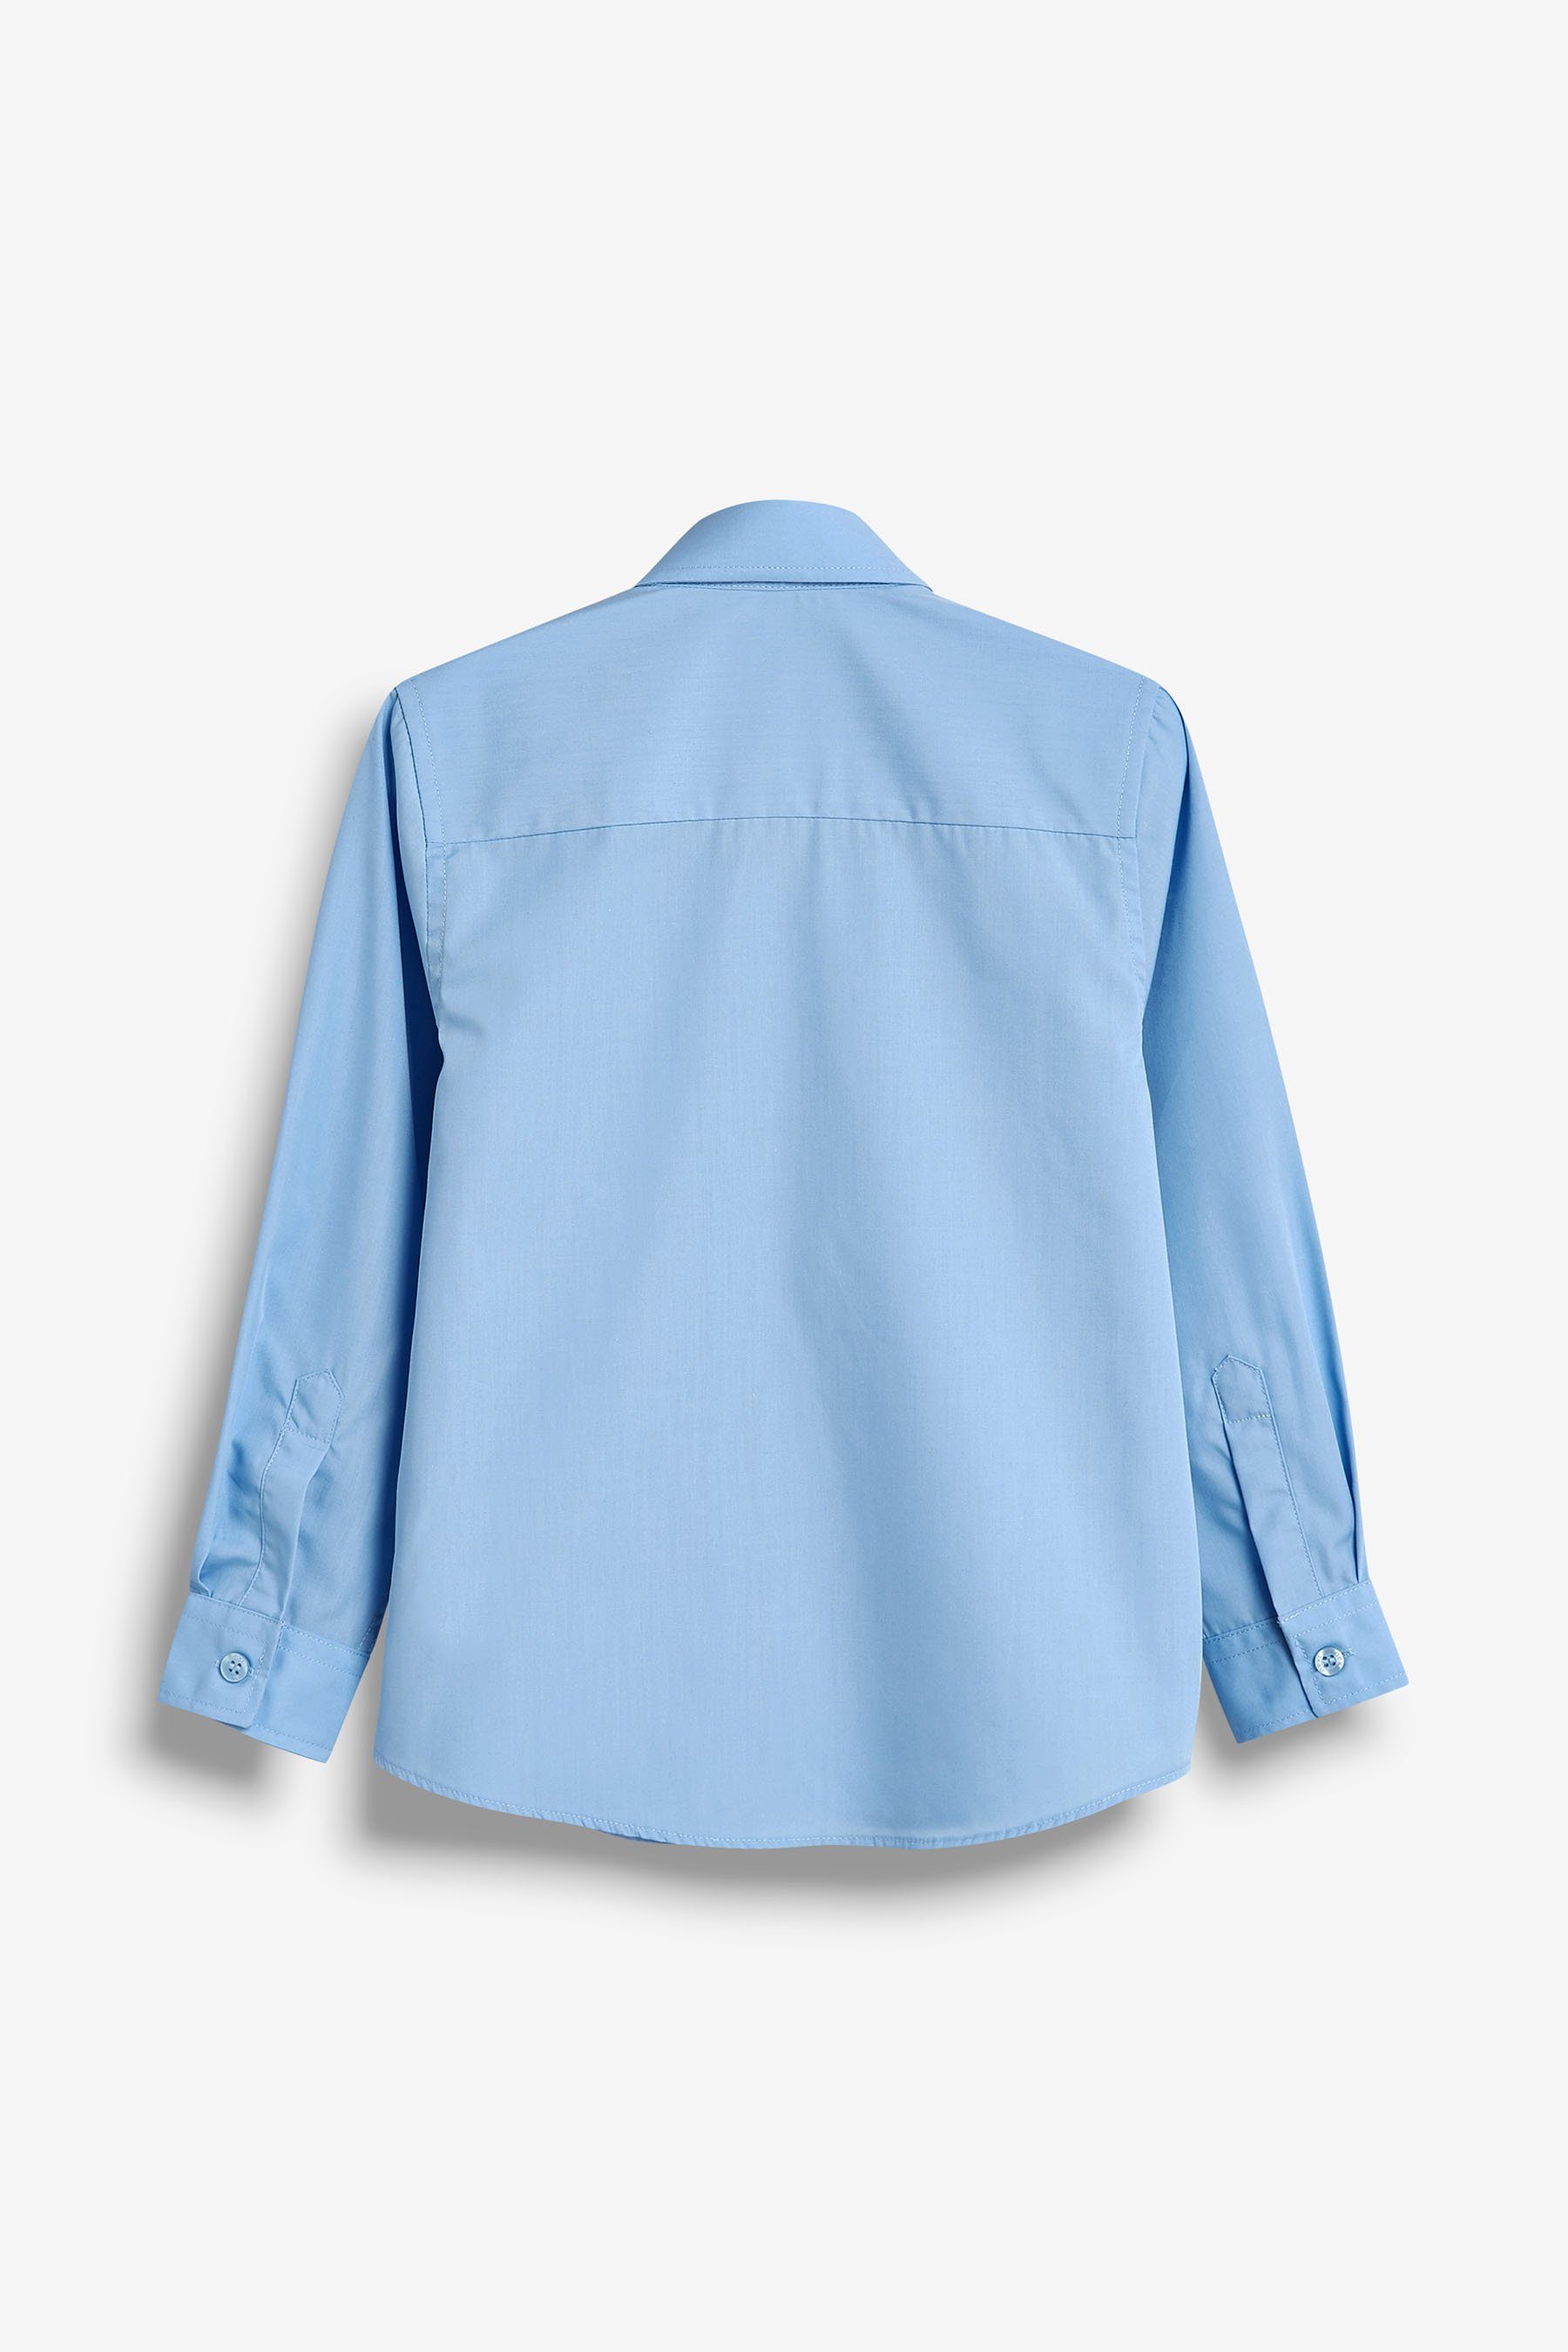 2er-Pack Blue Standard, Langarmhemden (3-17 Next (2-tlg) Jahre), Langarmhemd